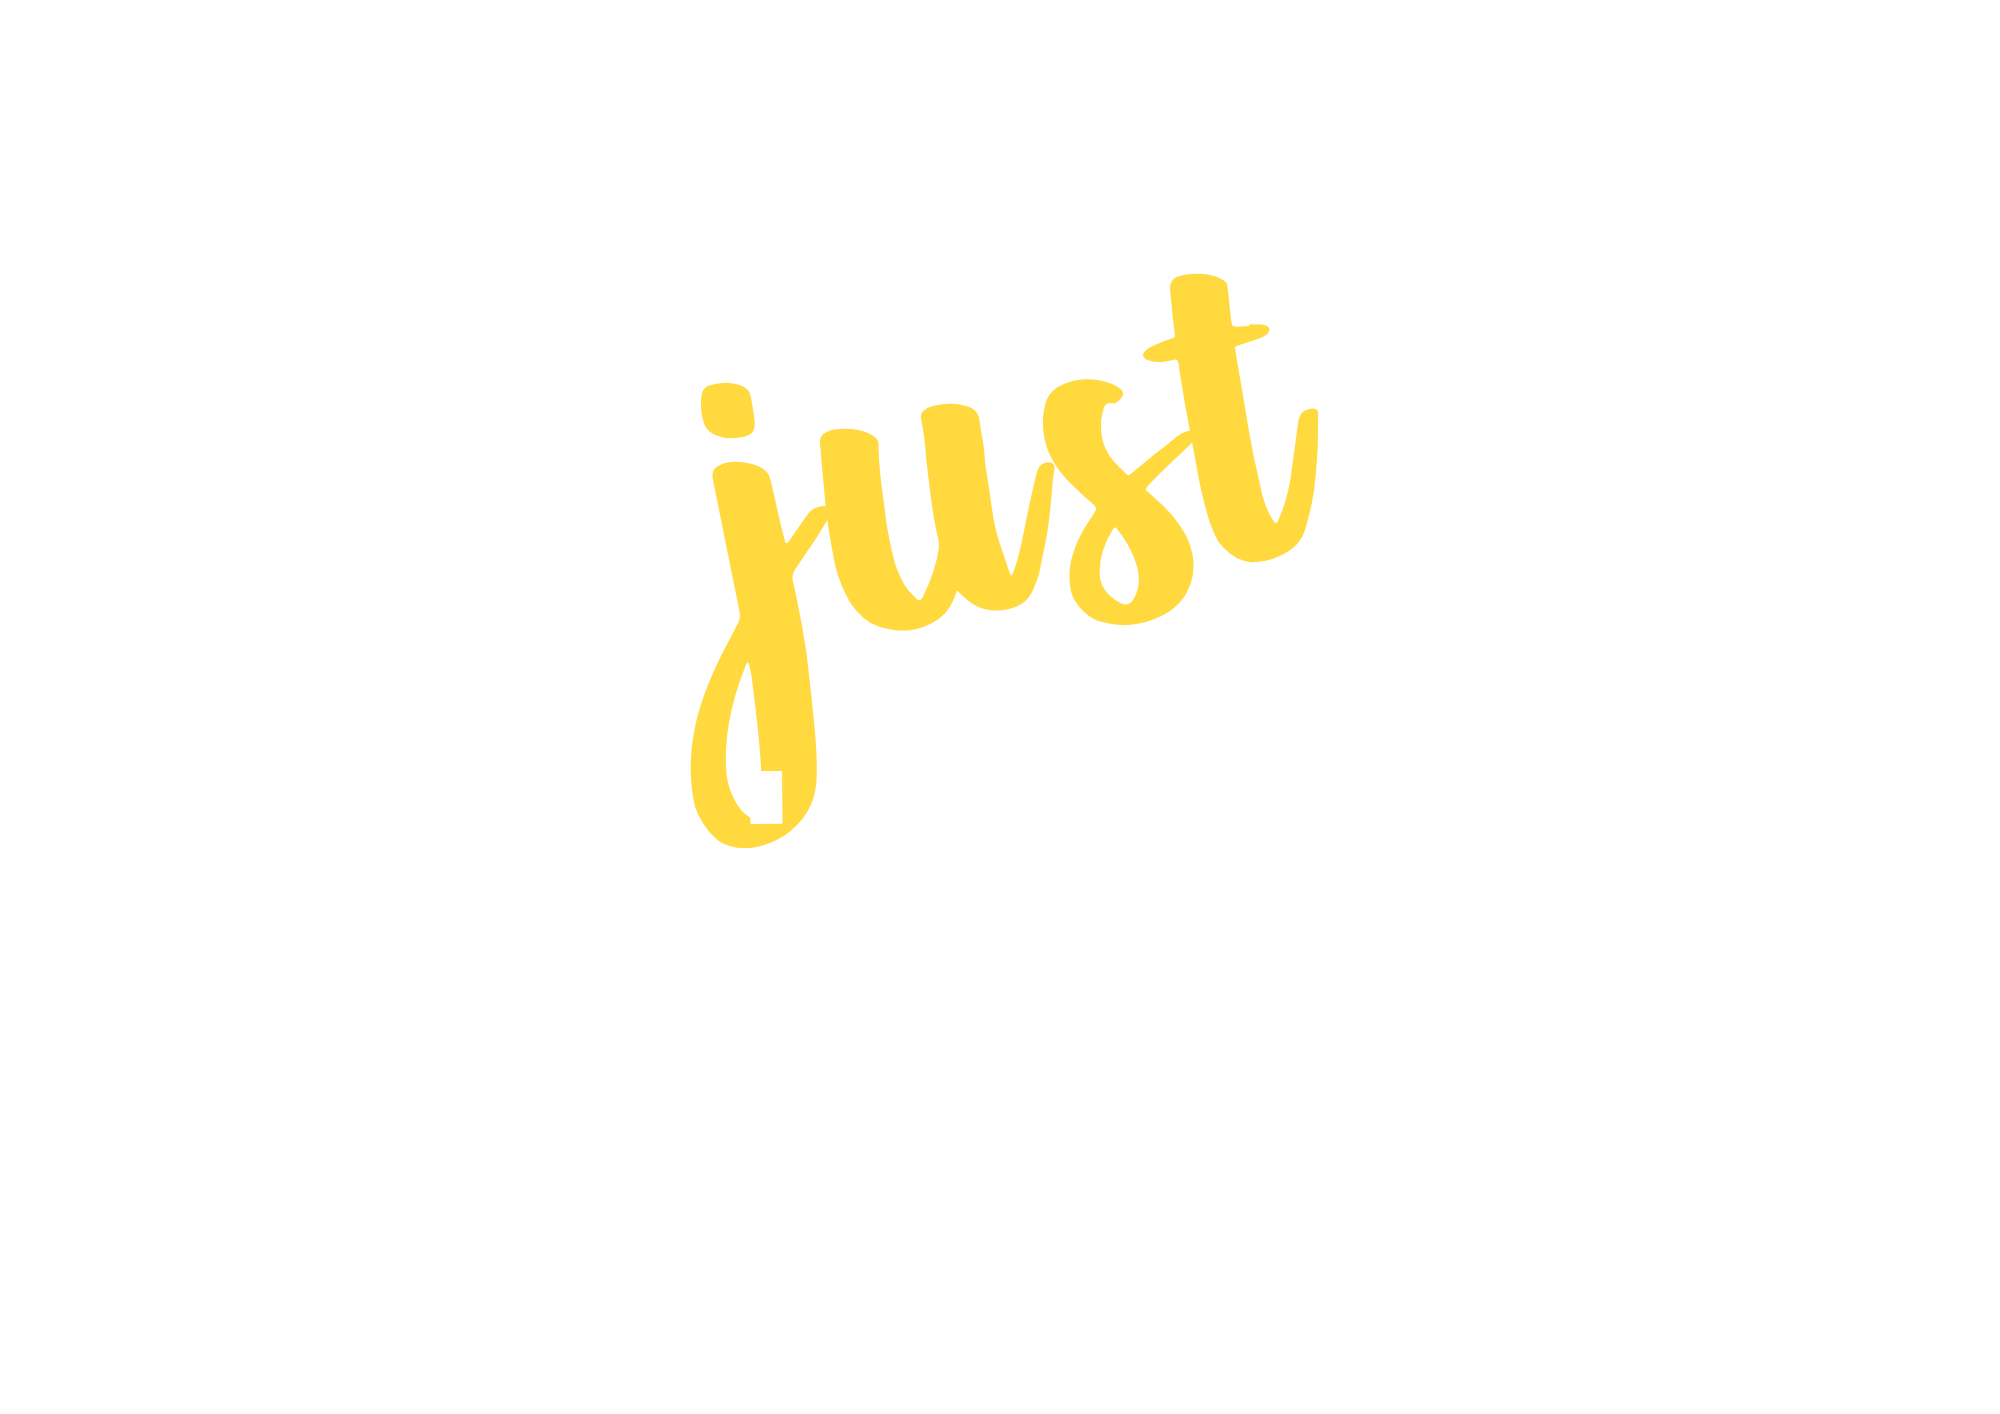 Just BREATHE!